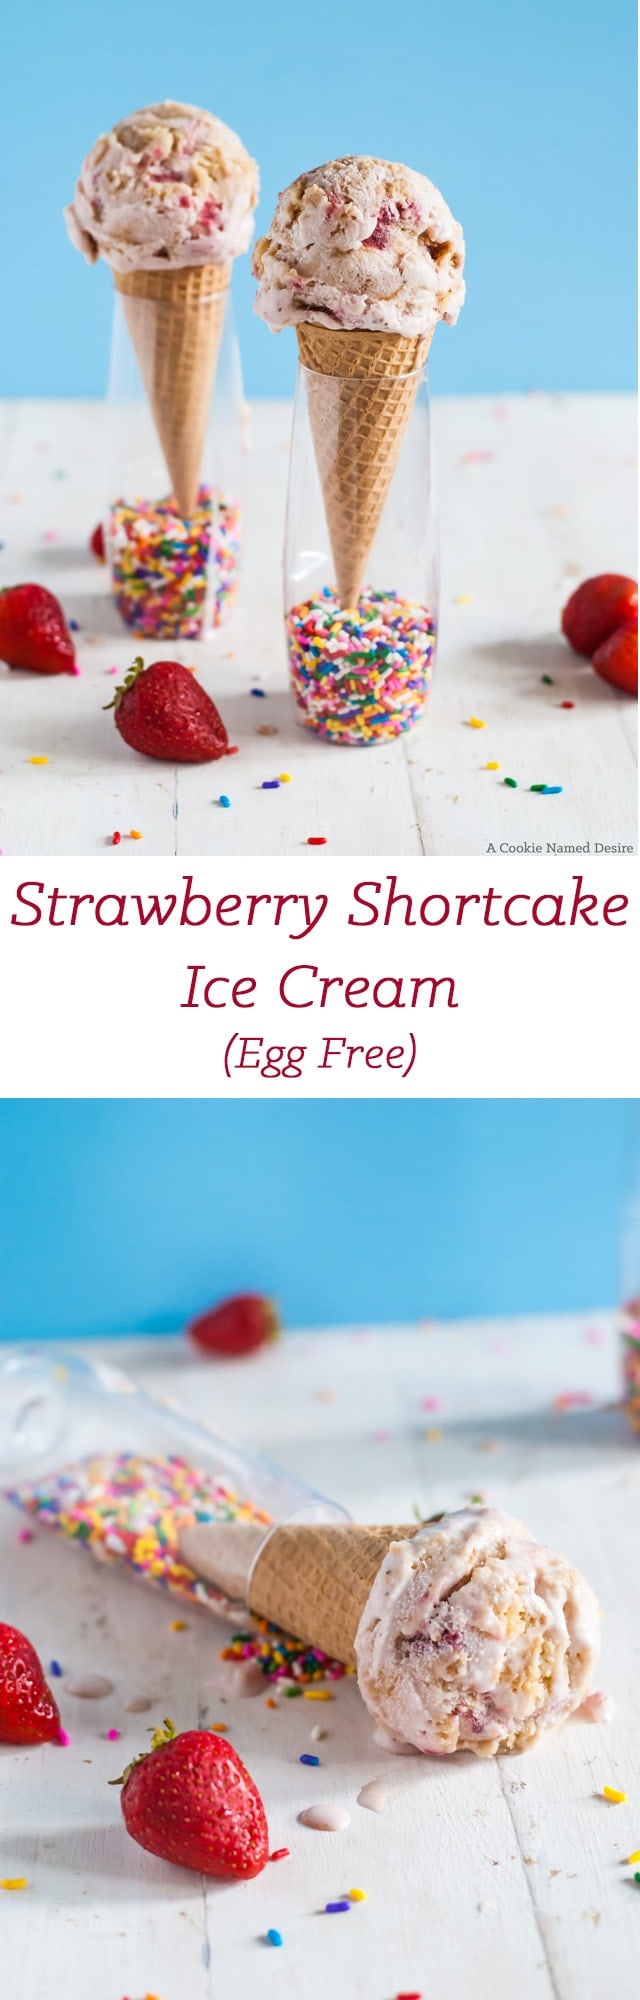 Egg free strawberry shortcake ice cream